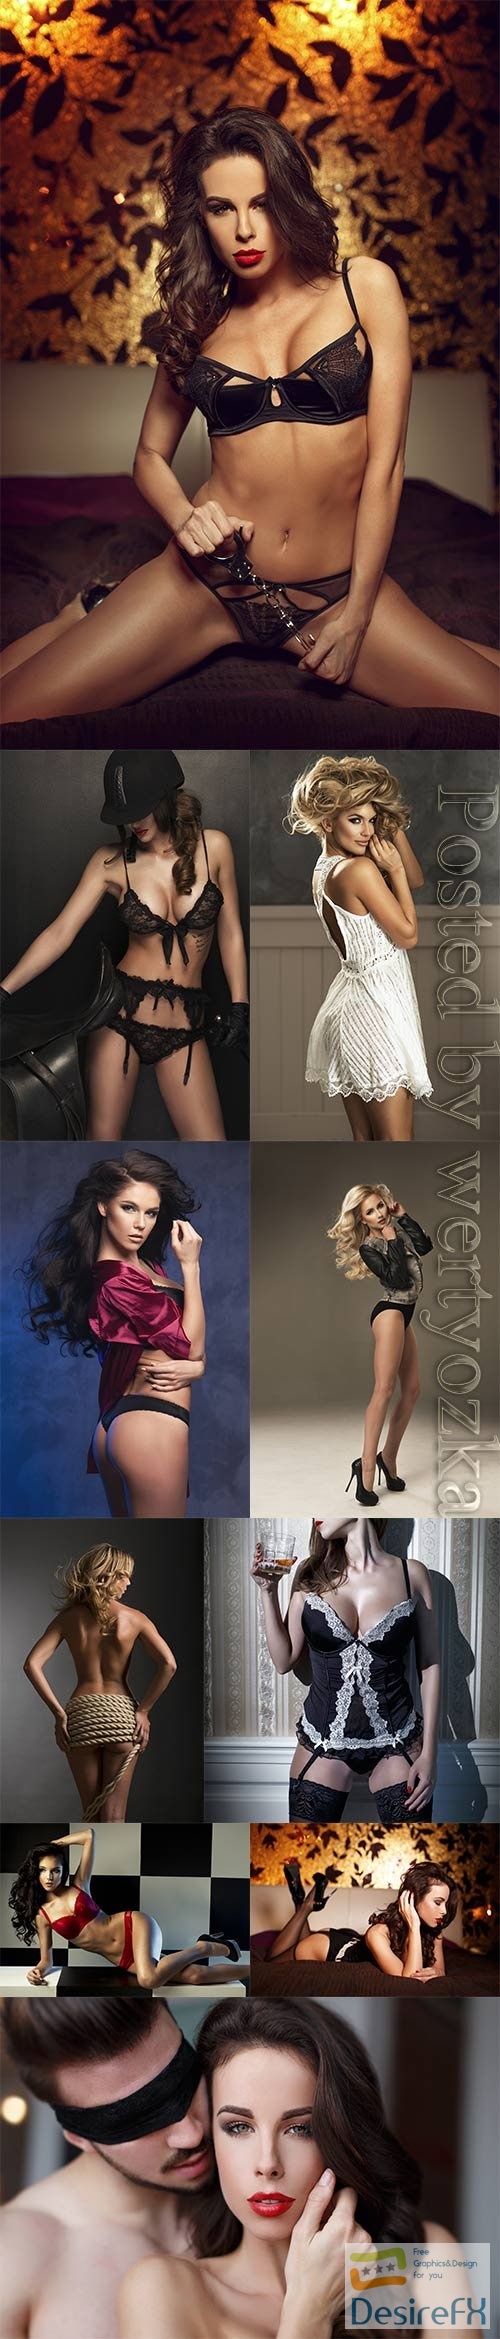 Luxury women in lingerie posing stock photo vol 18